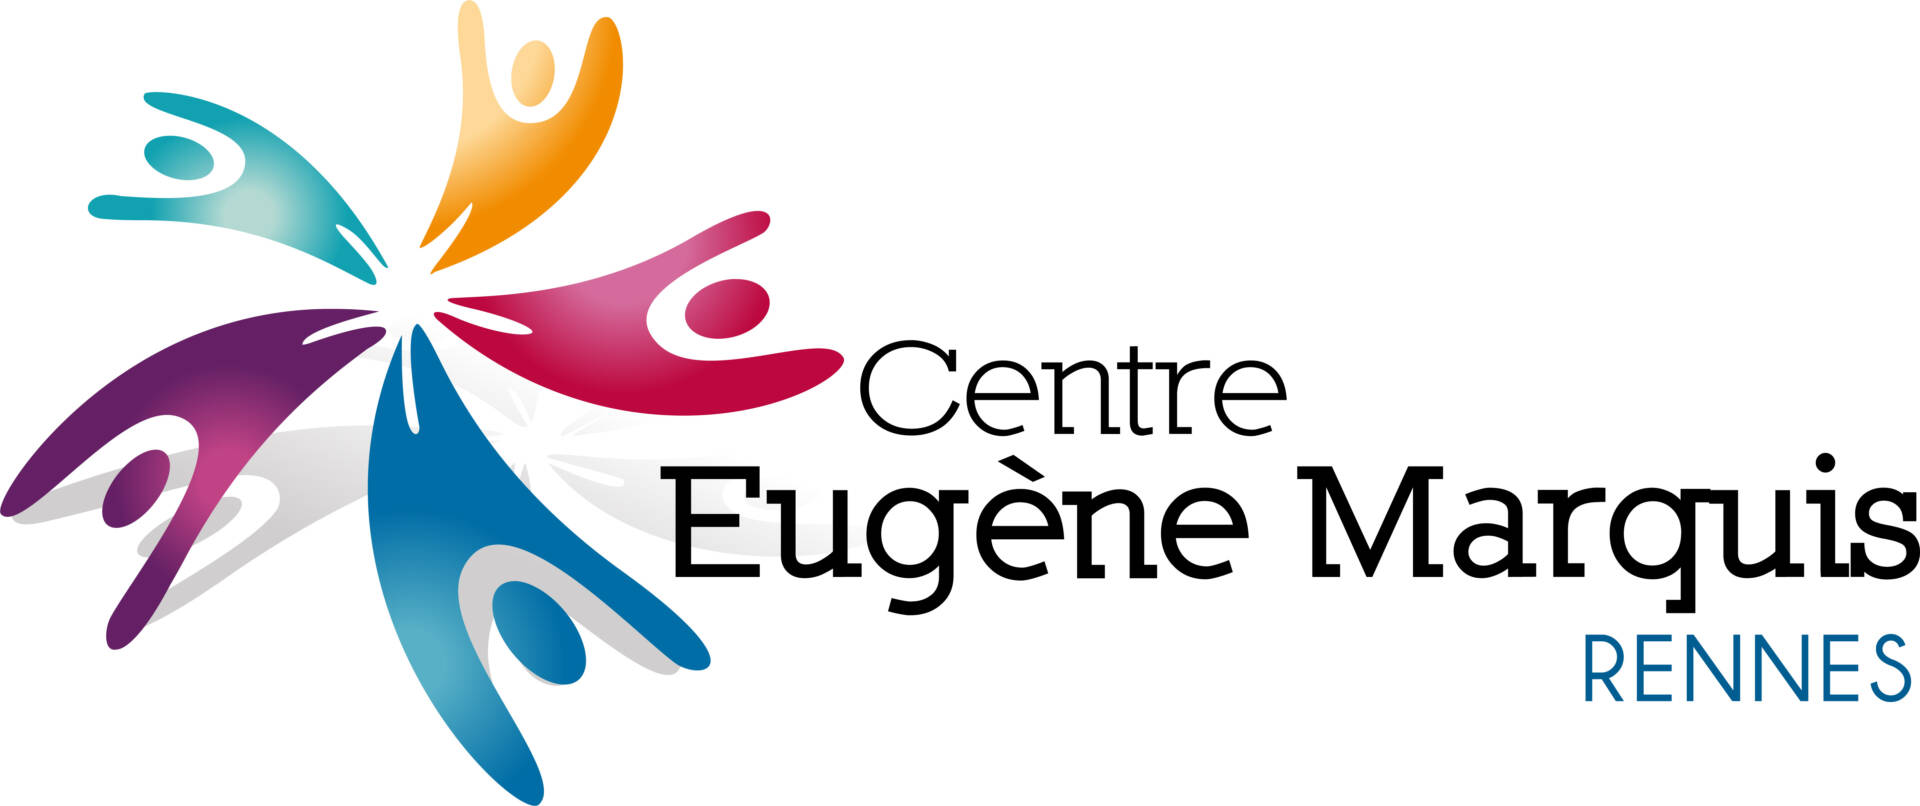 Centre Eugène marquis - Rennes